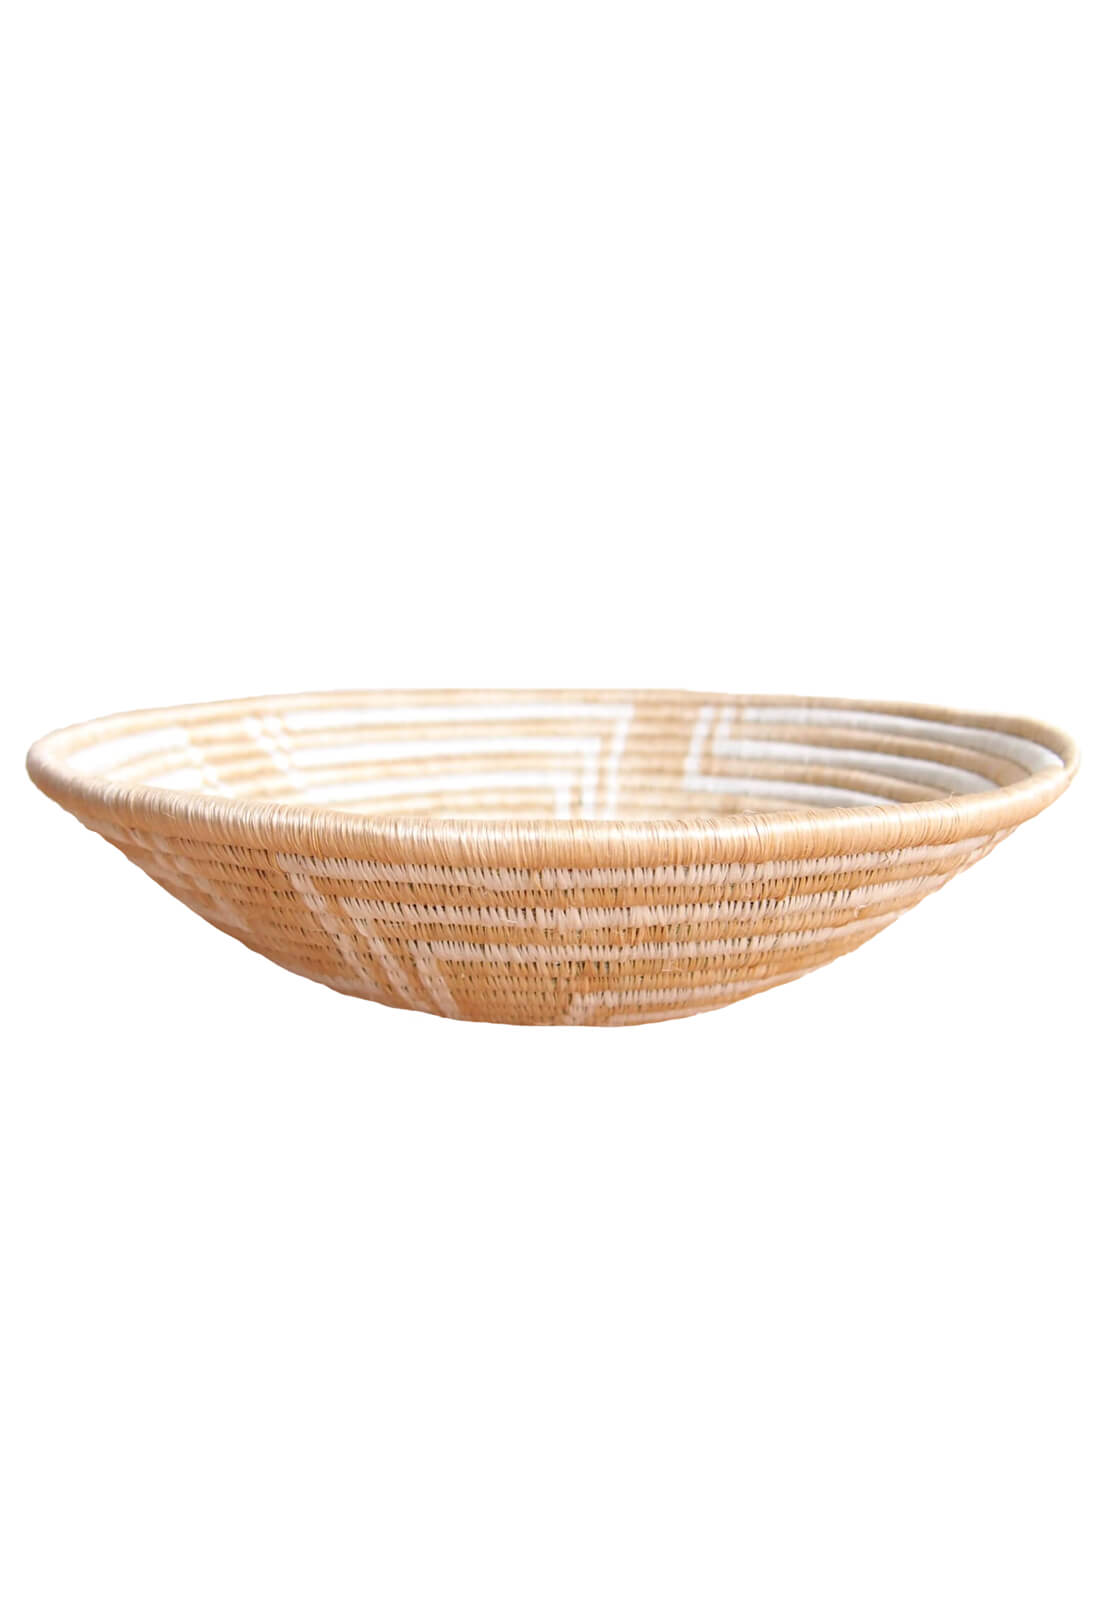 Hand Woven Geometric Plateau Basket - Tan and White, Small